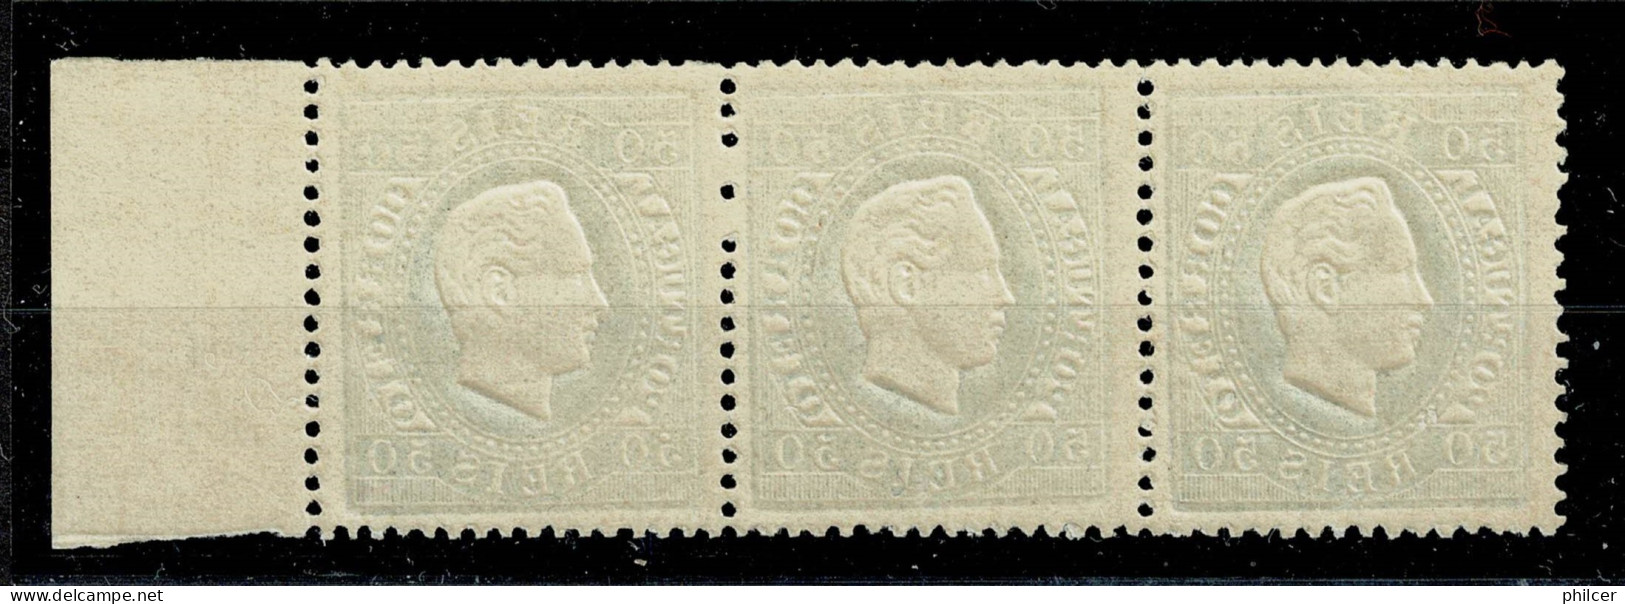 Portugal, 1879/80, # 50b Dent. 13 1/2, Tipo I, Com Certificado, MNH - Unused Stamps